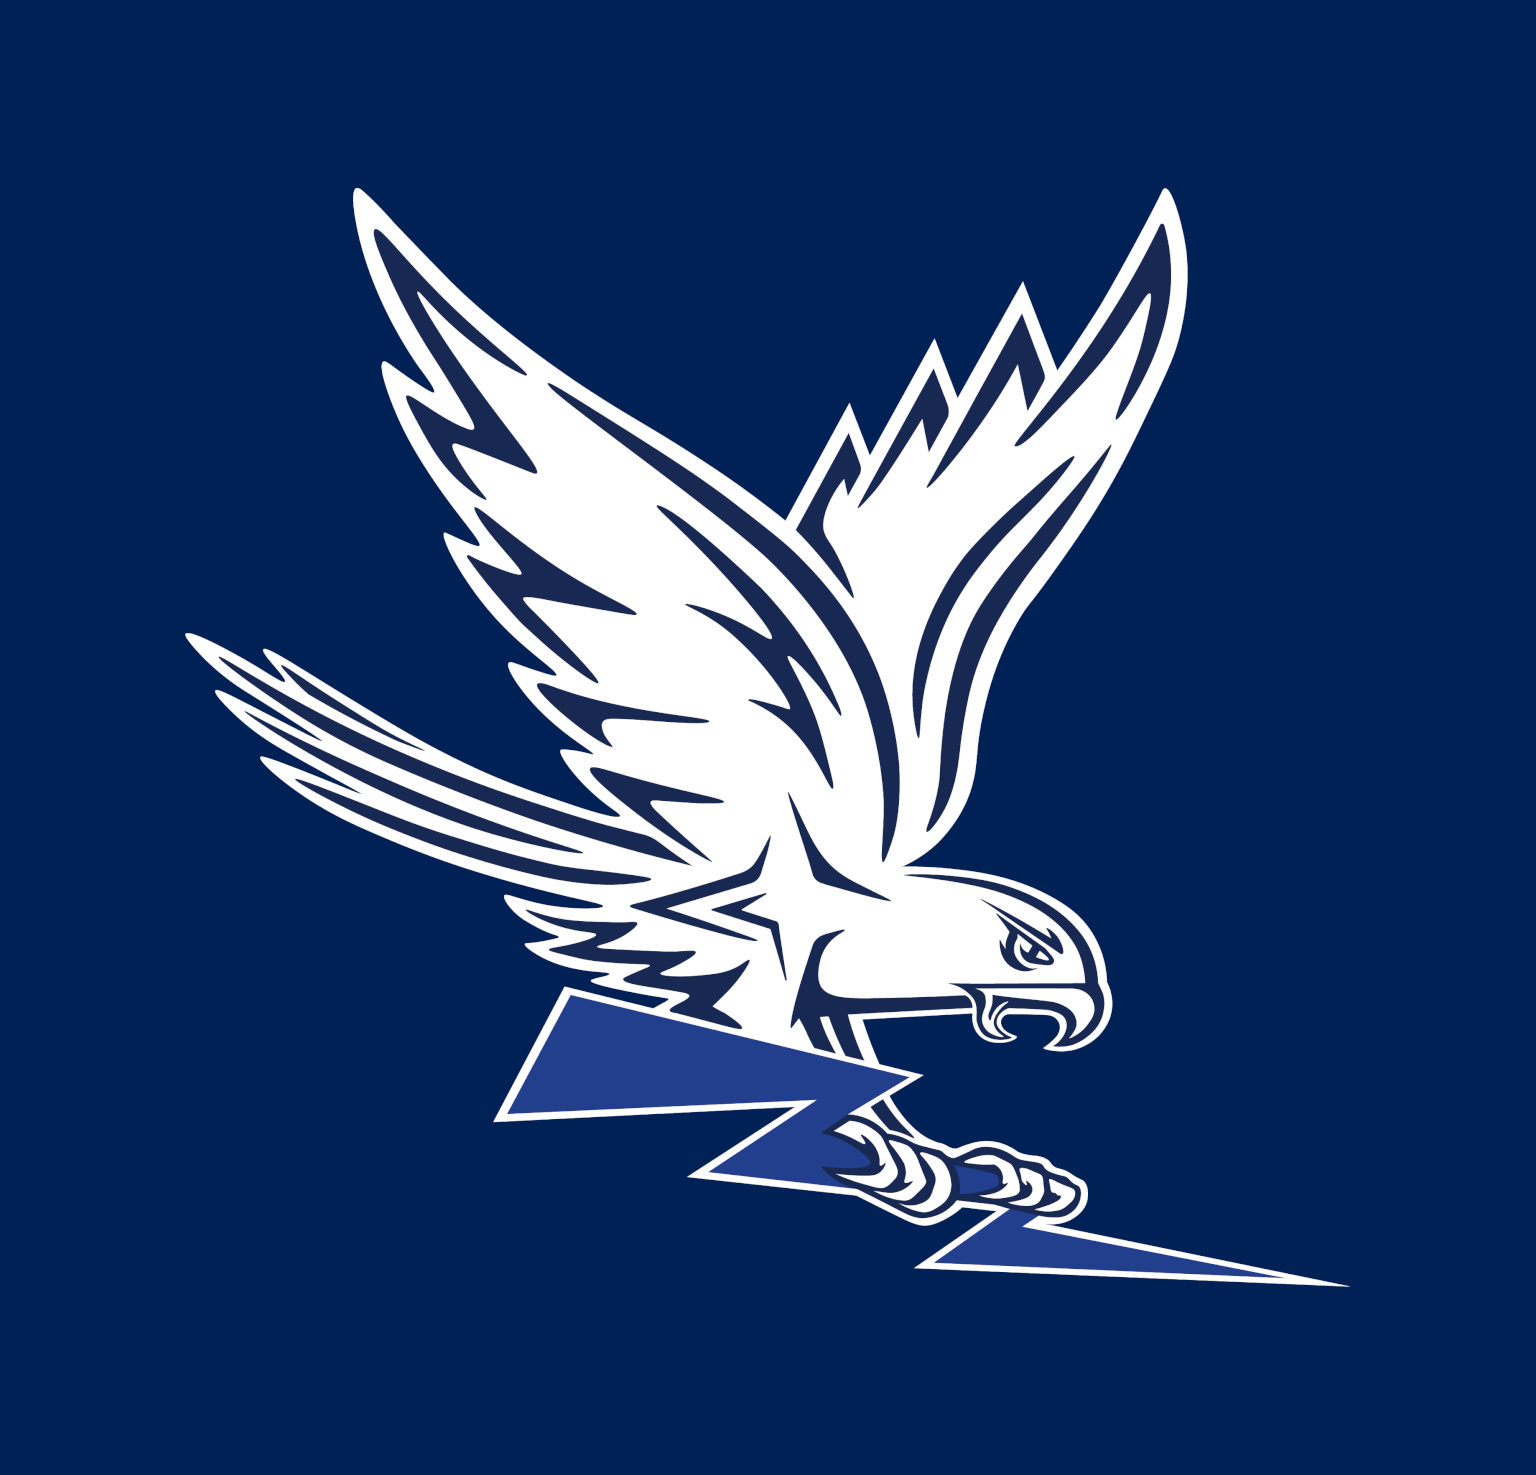 Falcon Spirit Mark on Blue Background